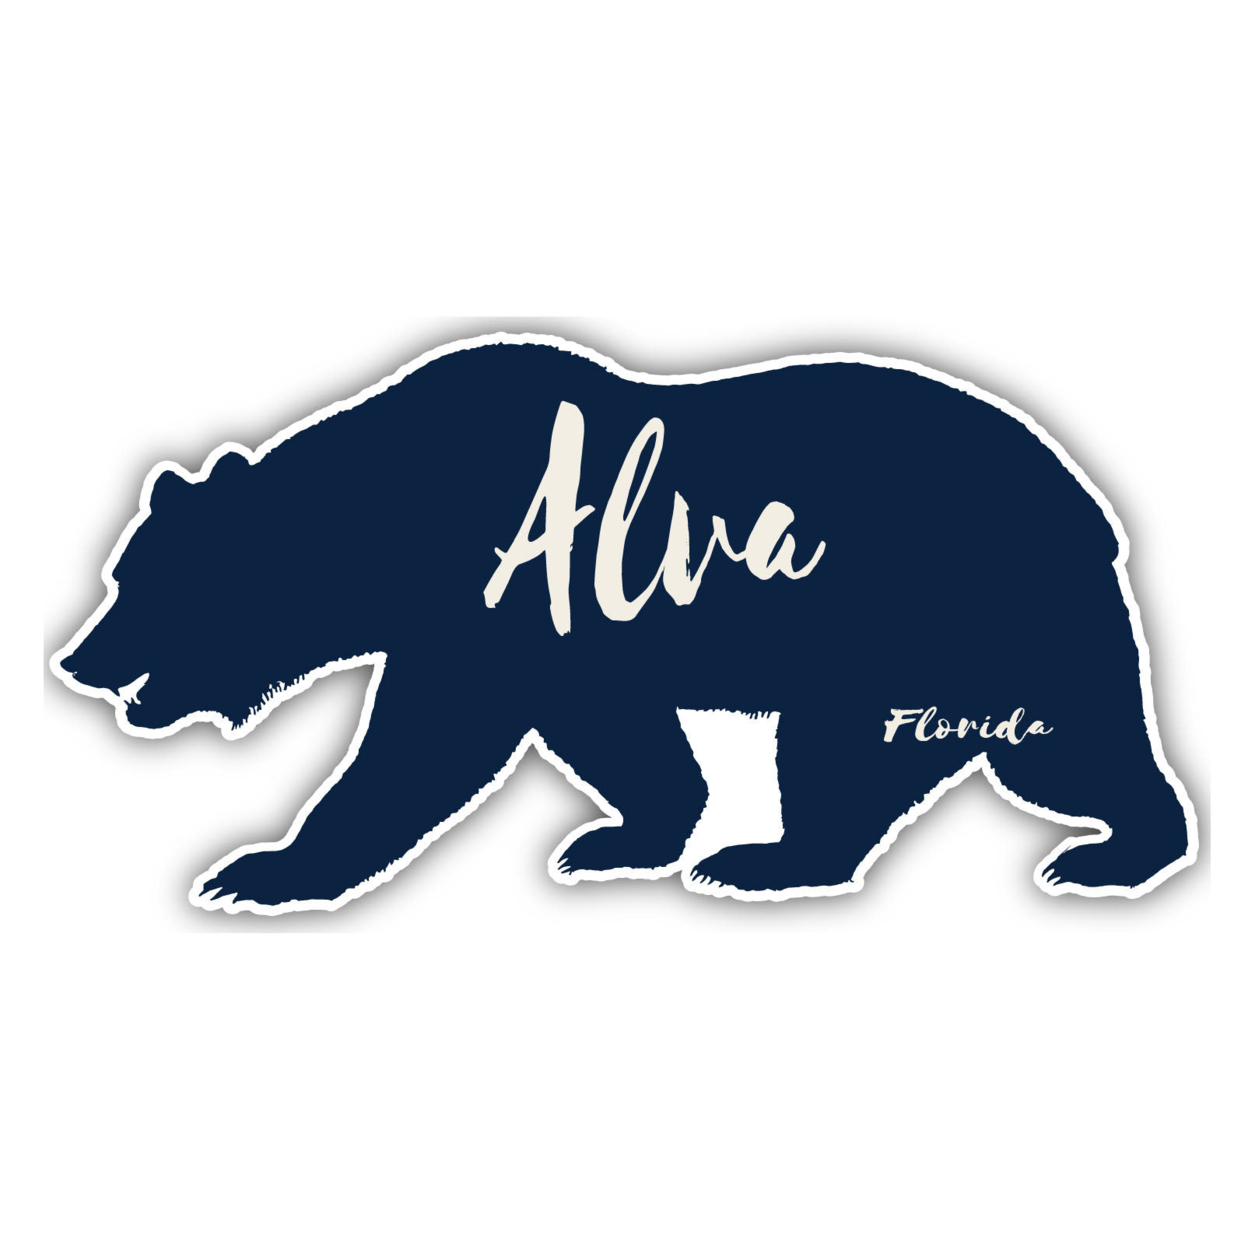 Alva Florida Souvenir Decorative Stickers (Choose Theme And Size) - Single Unit, 4-Inch, Bear